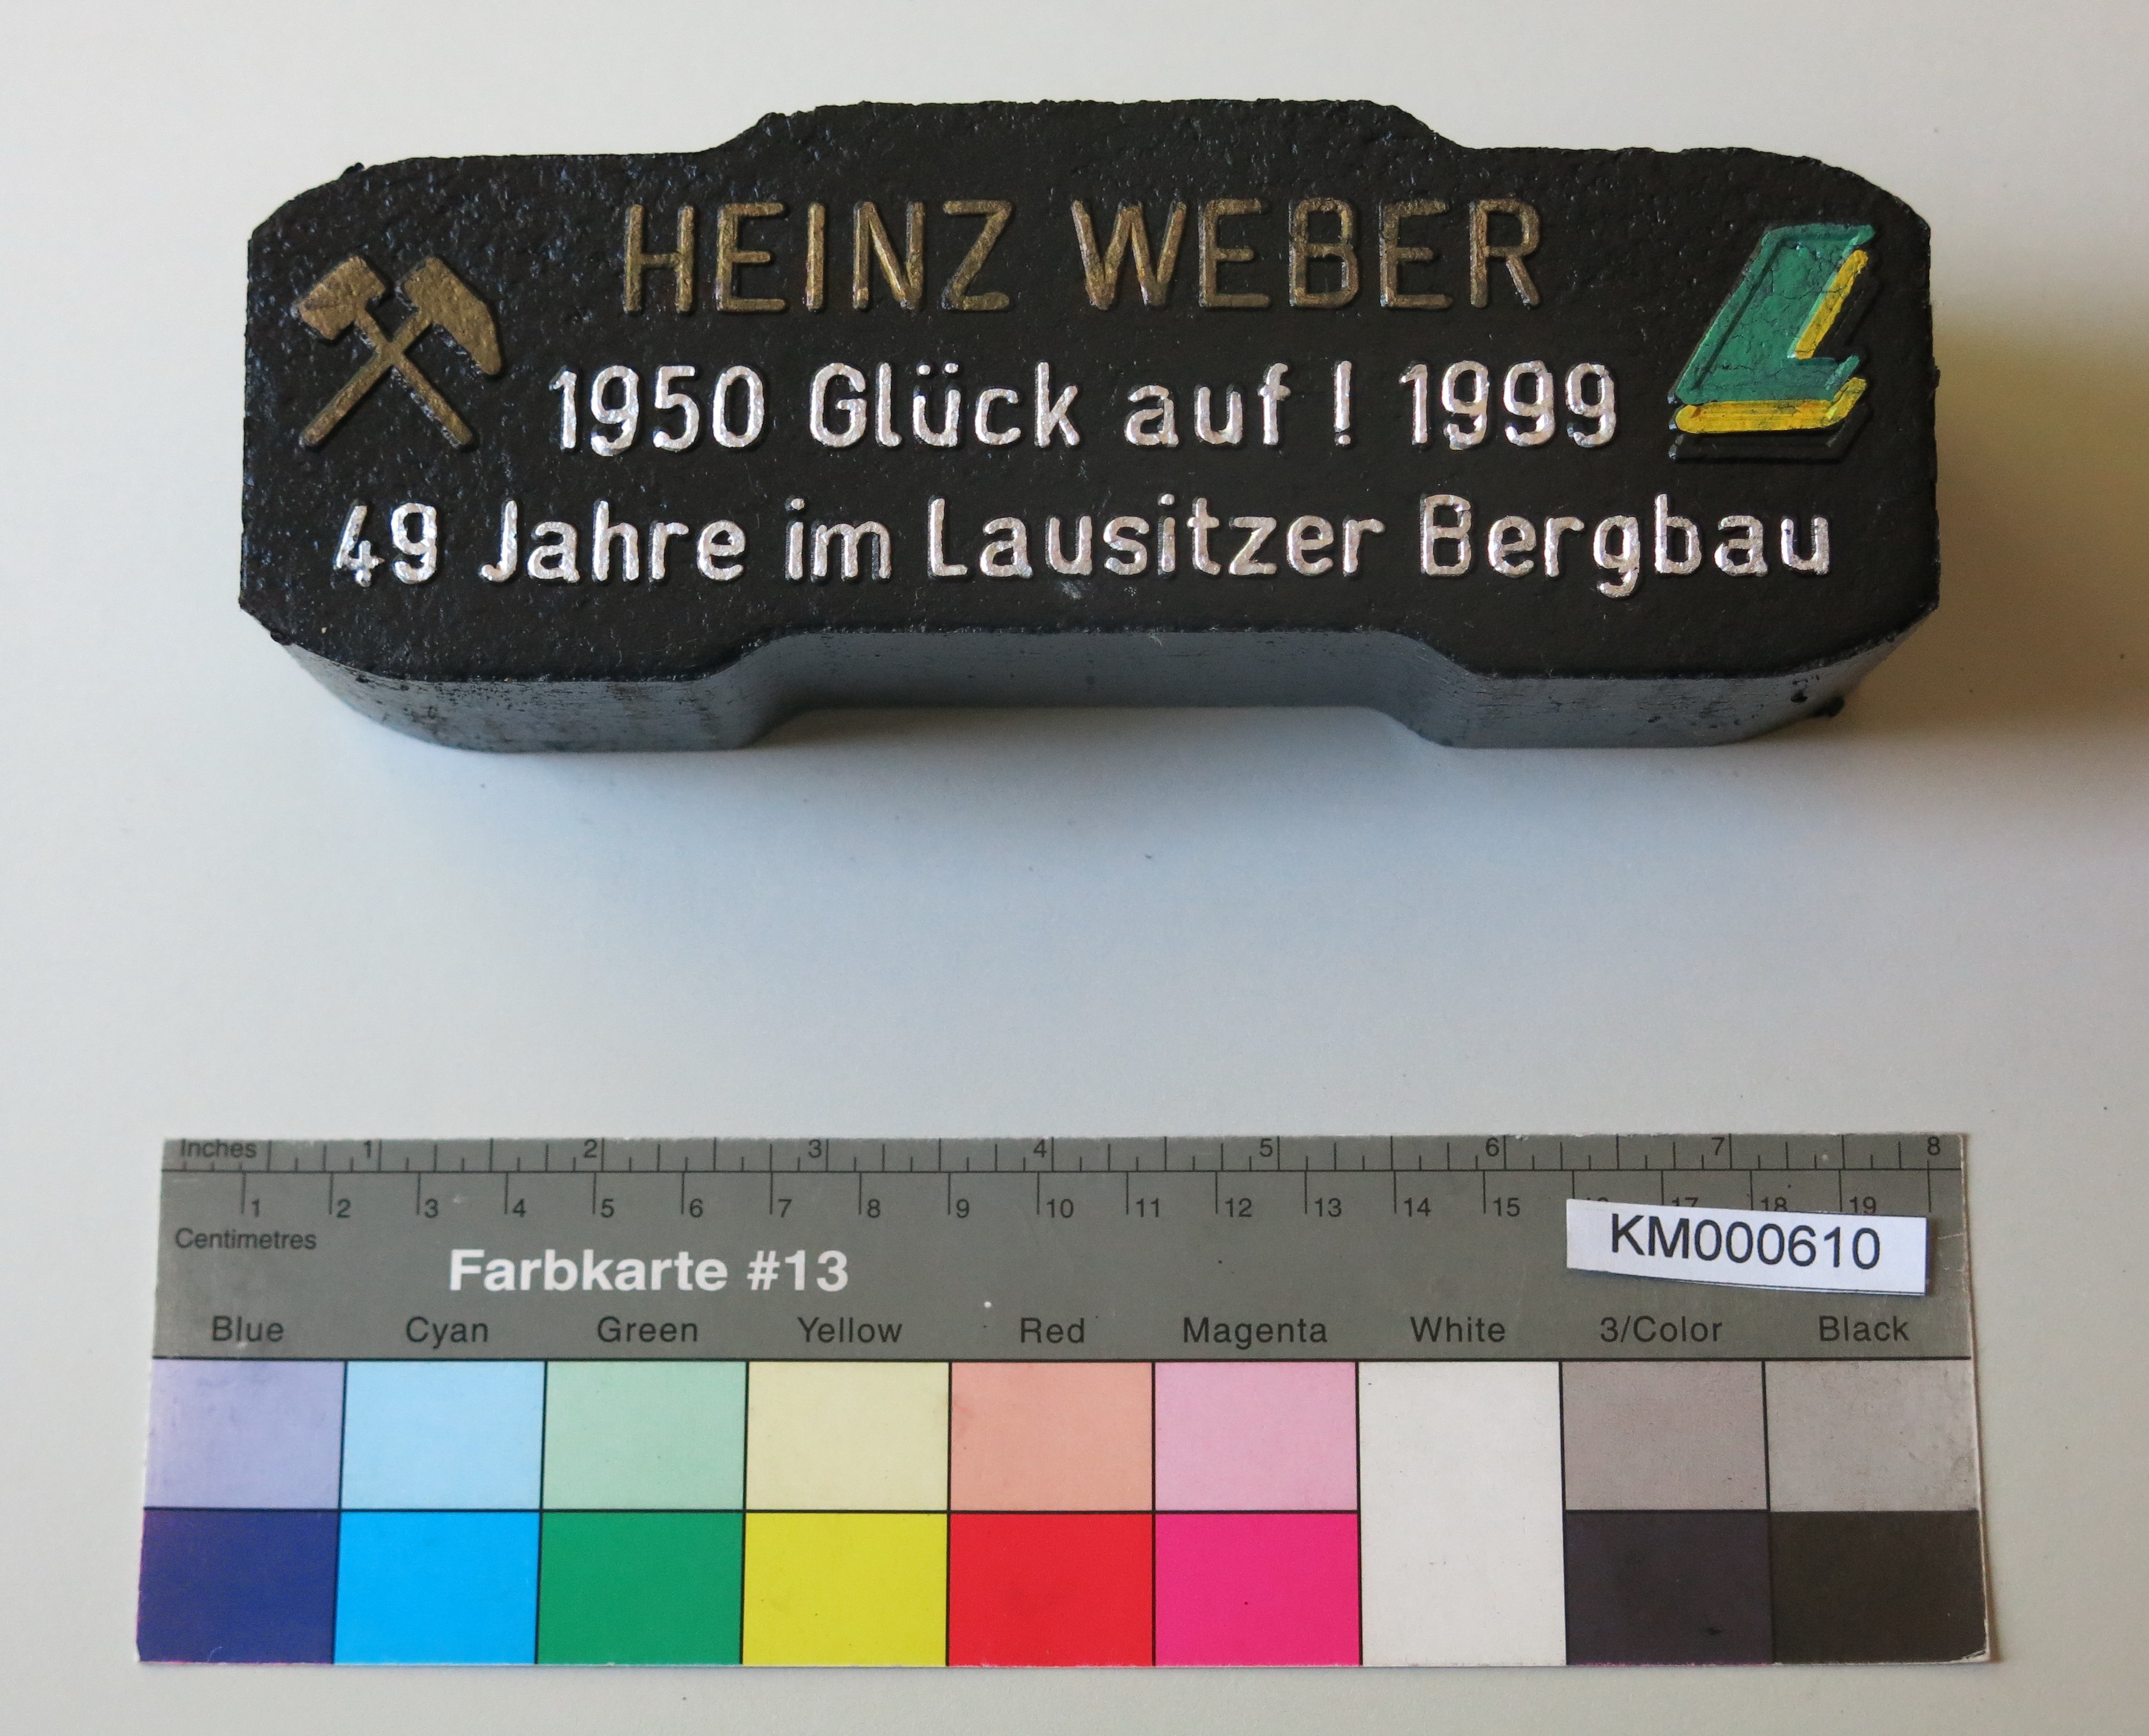 Zierbrikett "HEINZ WEBER 1950 Glück auf! 1999 49 Jahre im Lausitzer Bergbau" (Energiefabrik Knappenrode CC BY-SA)